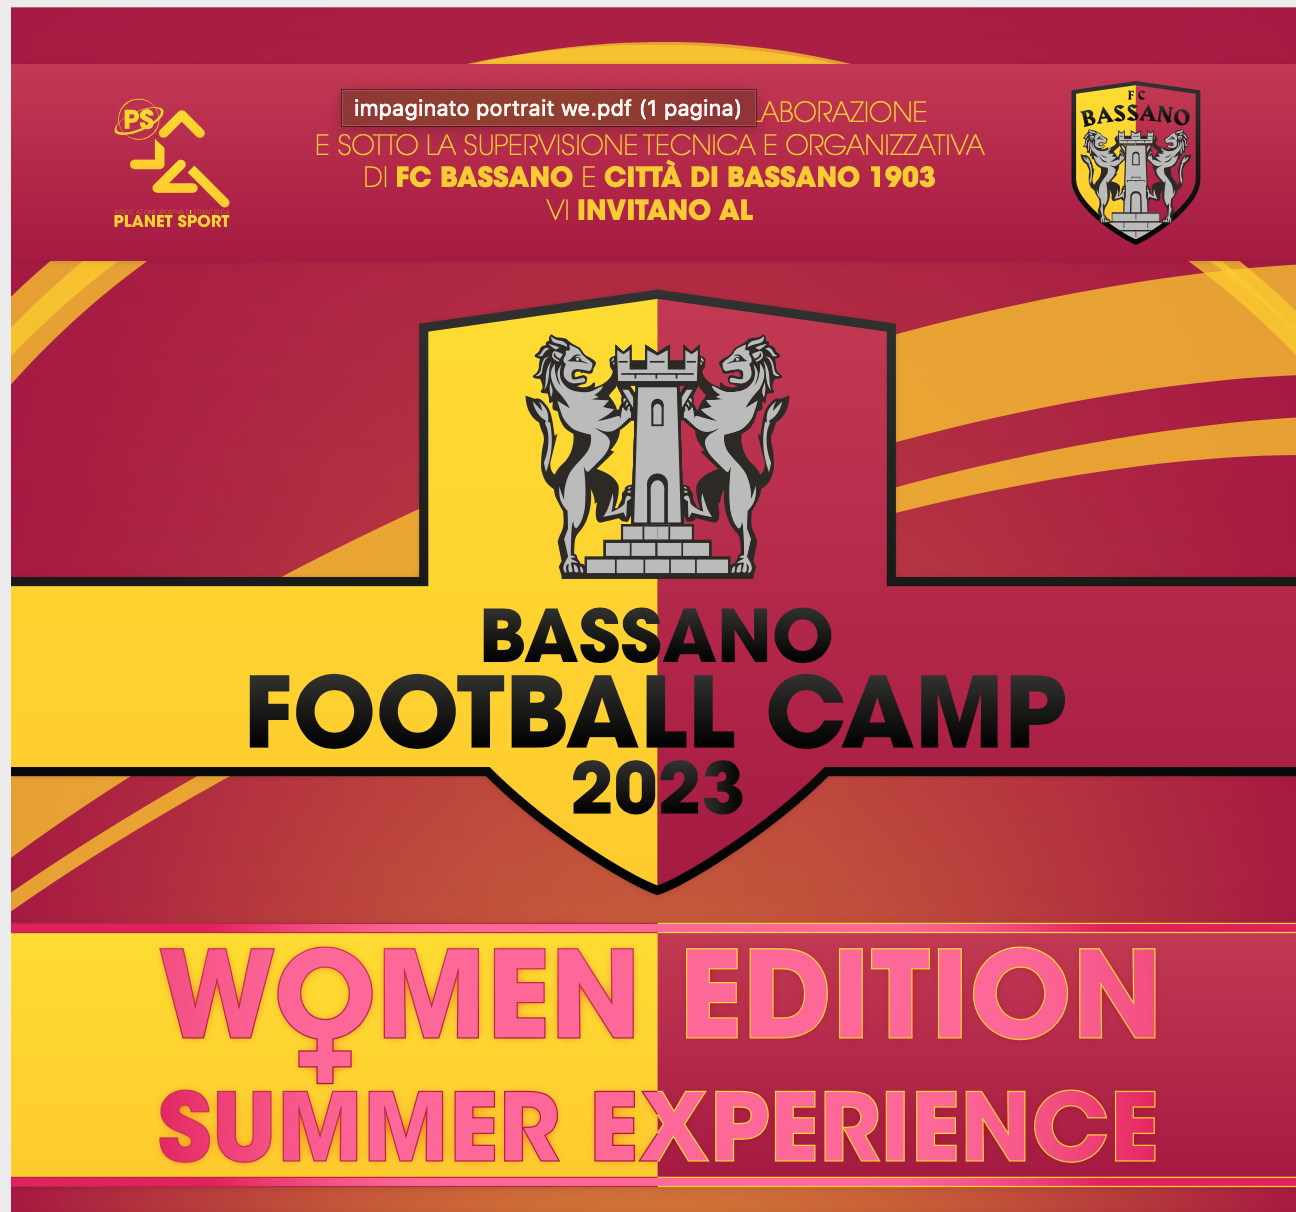 BASSANO FOOTBALL CAMP WOMEN EDITION 